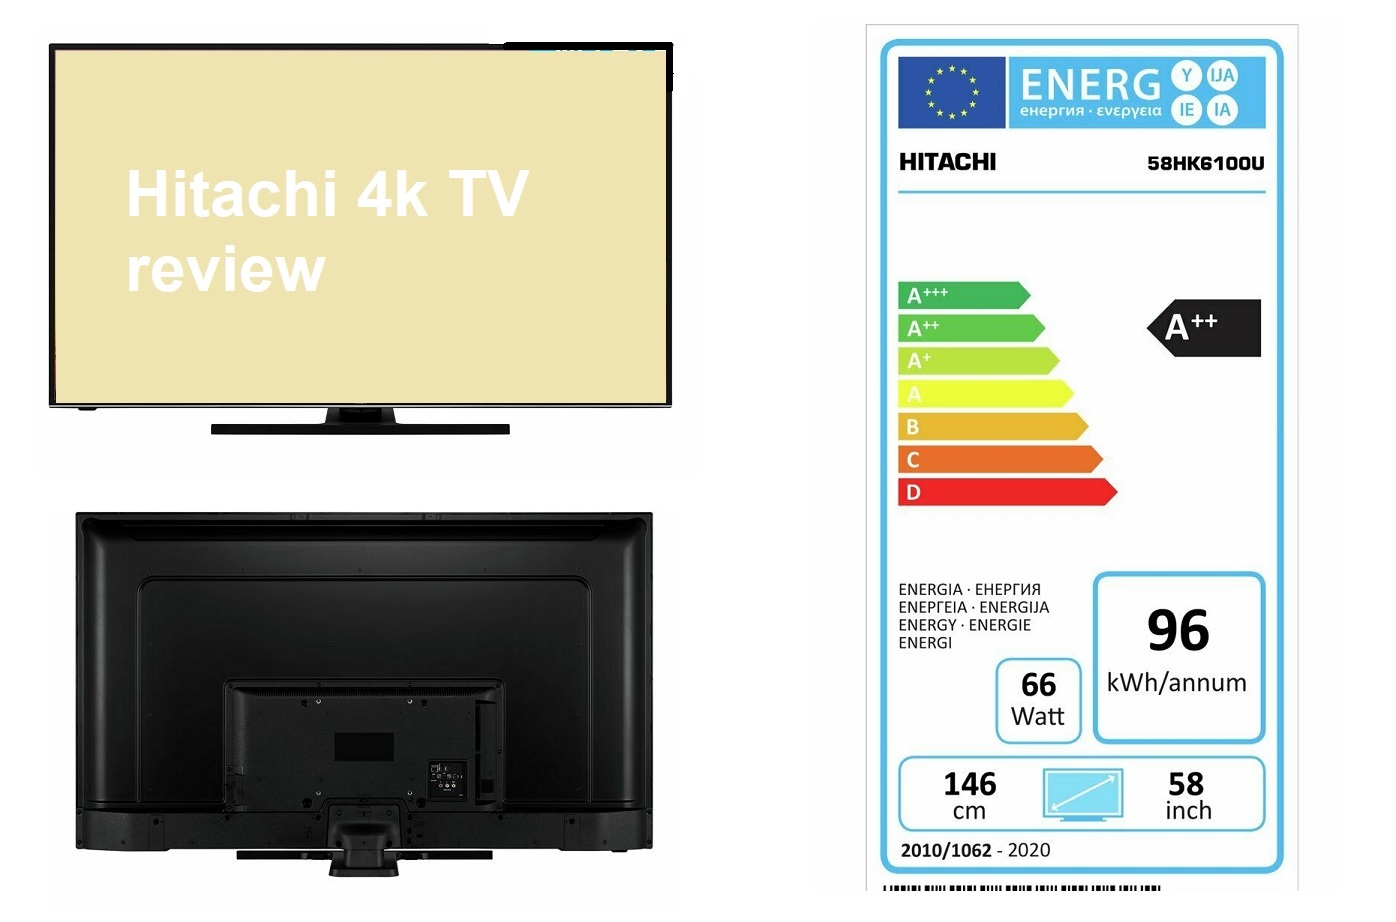 Hitachi 4k Tv Review